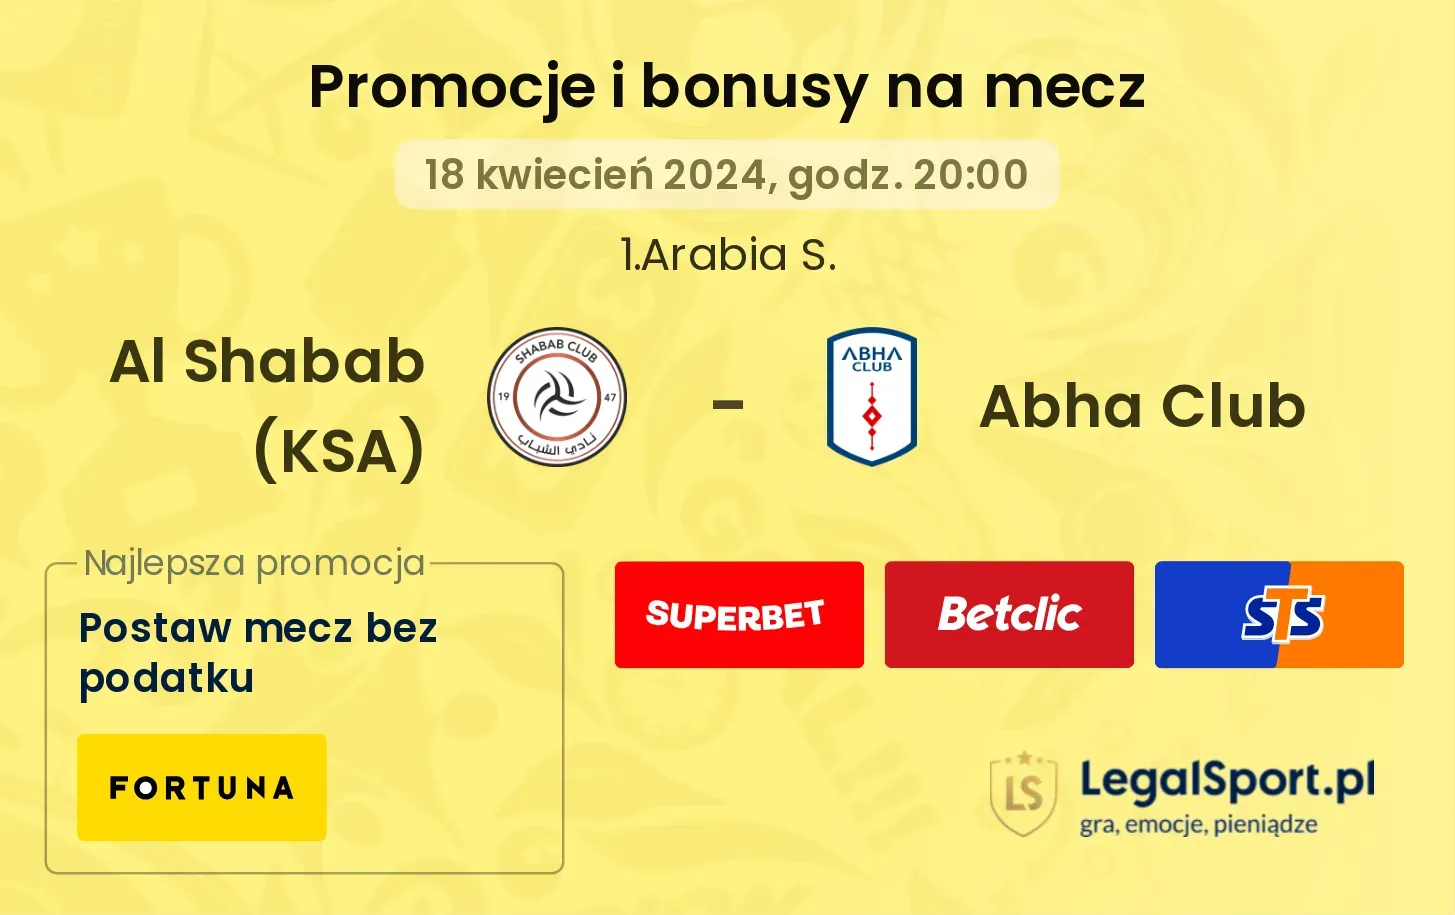 Al Shabab (KSA) - Abha Club promocje bonusy na mecz